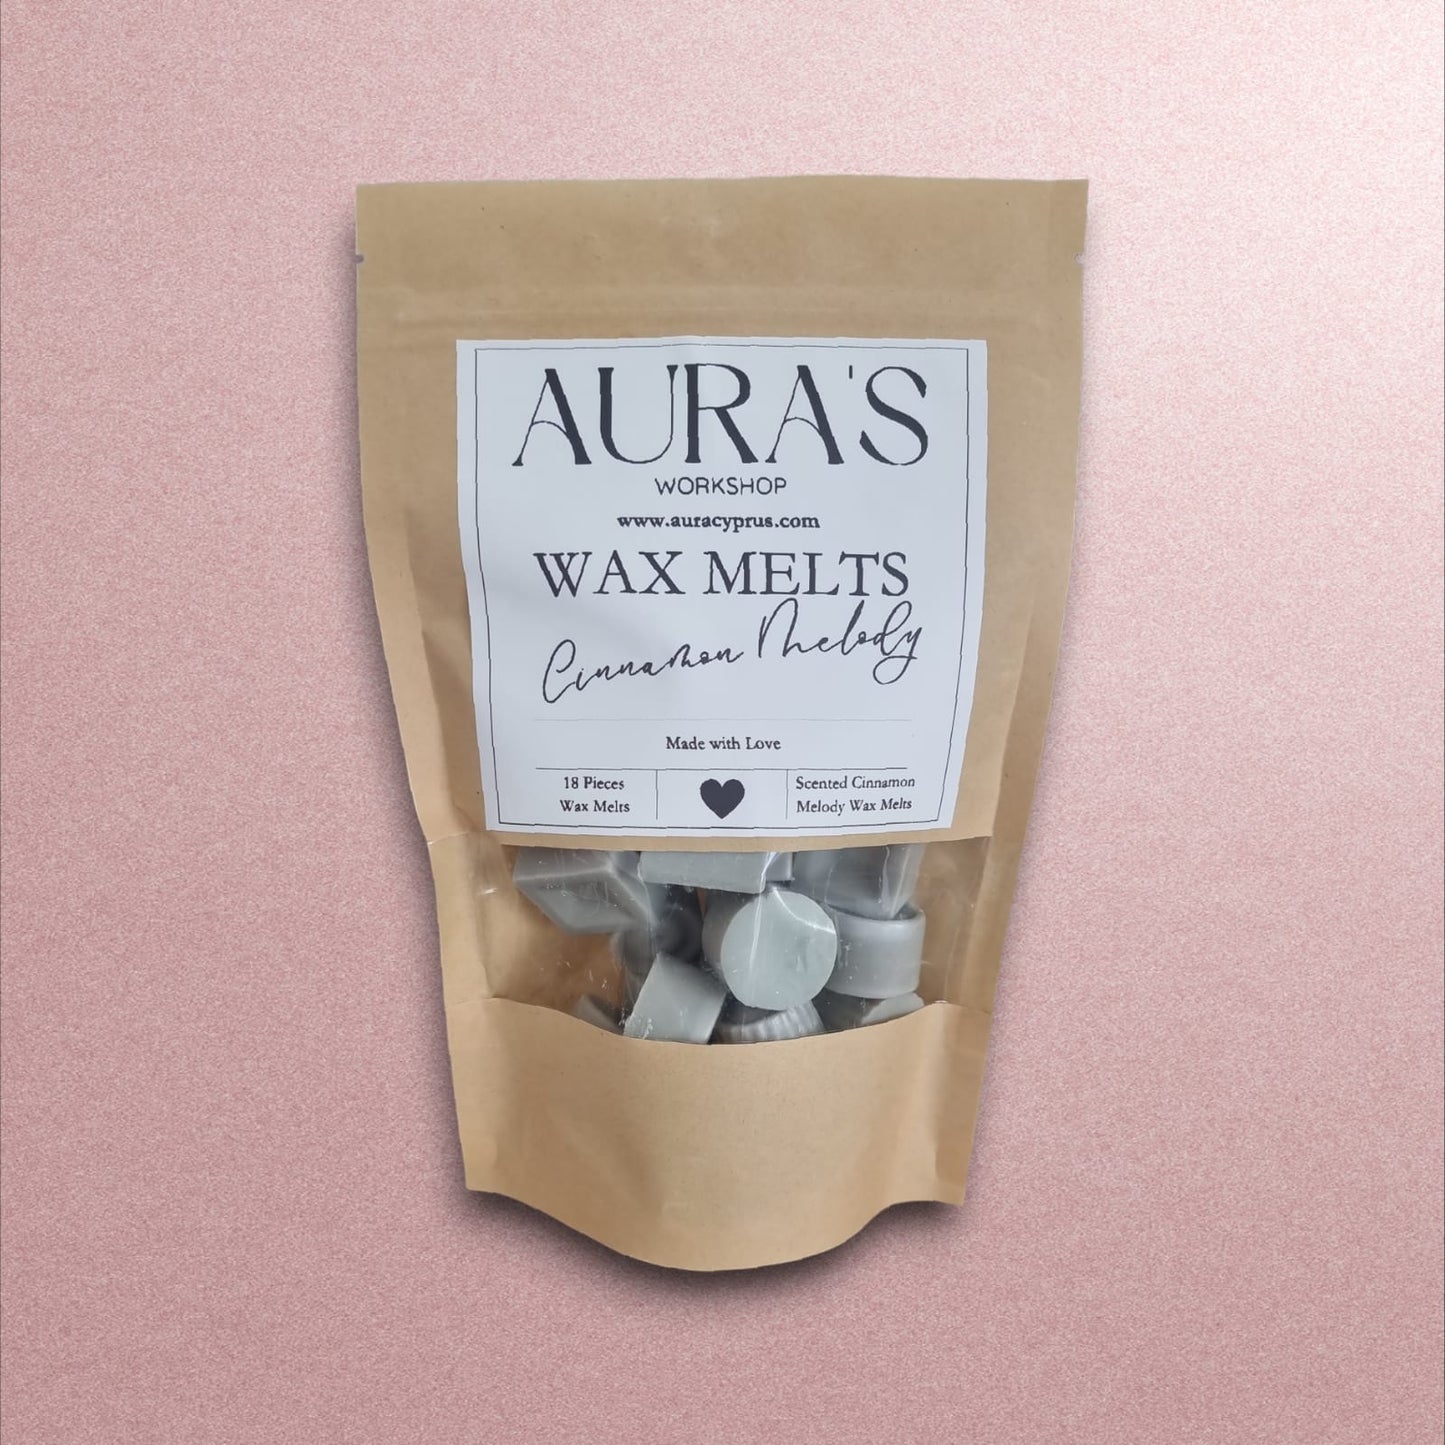 Cinnamon Melody Wax Melts 18 Mix Shapes Large Bag 295 grams - Auras Workshop  -   -   - Cyprus & Greece